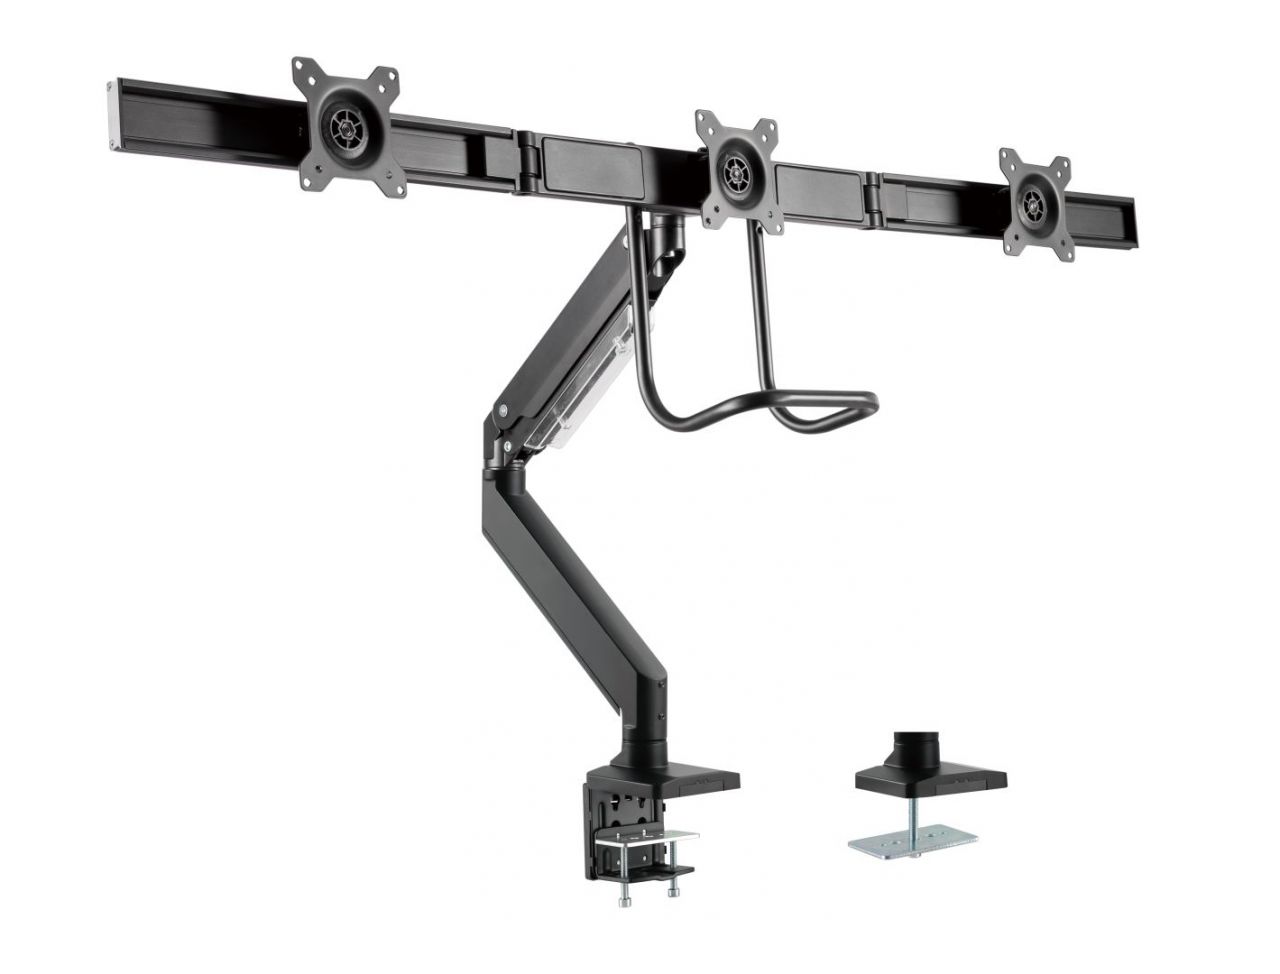 Gembird MA-DA3-03 Desk mounted adjustable monitor arm for 3 monitors 17"-27" Black